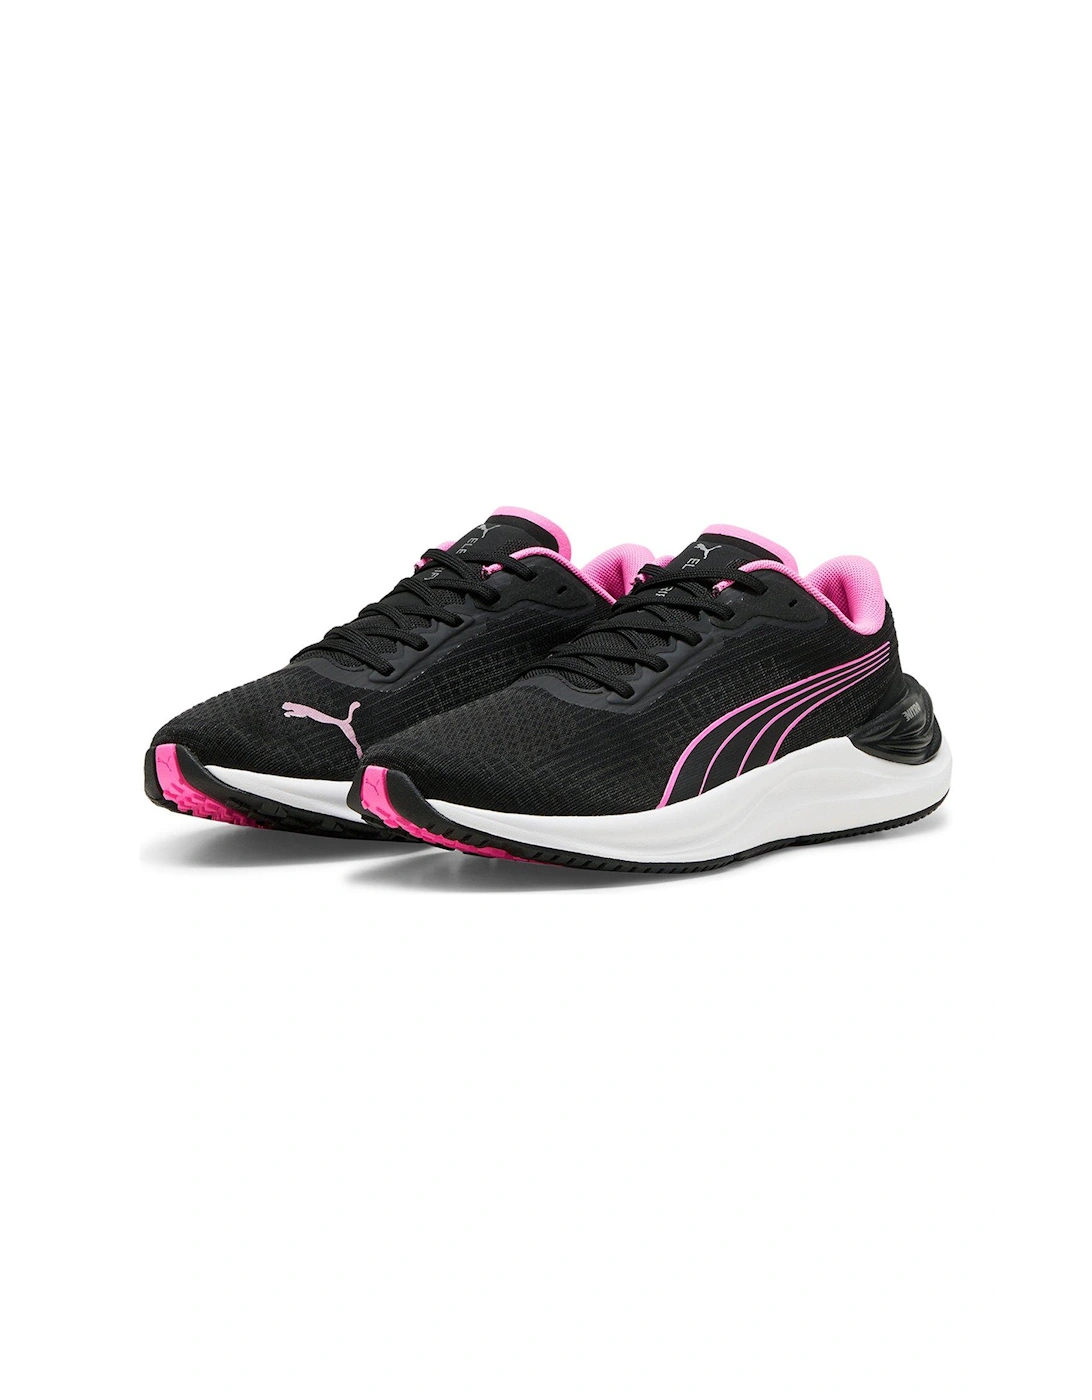 Womens Running Electrify Nitro 3 - Black/pink